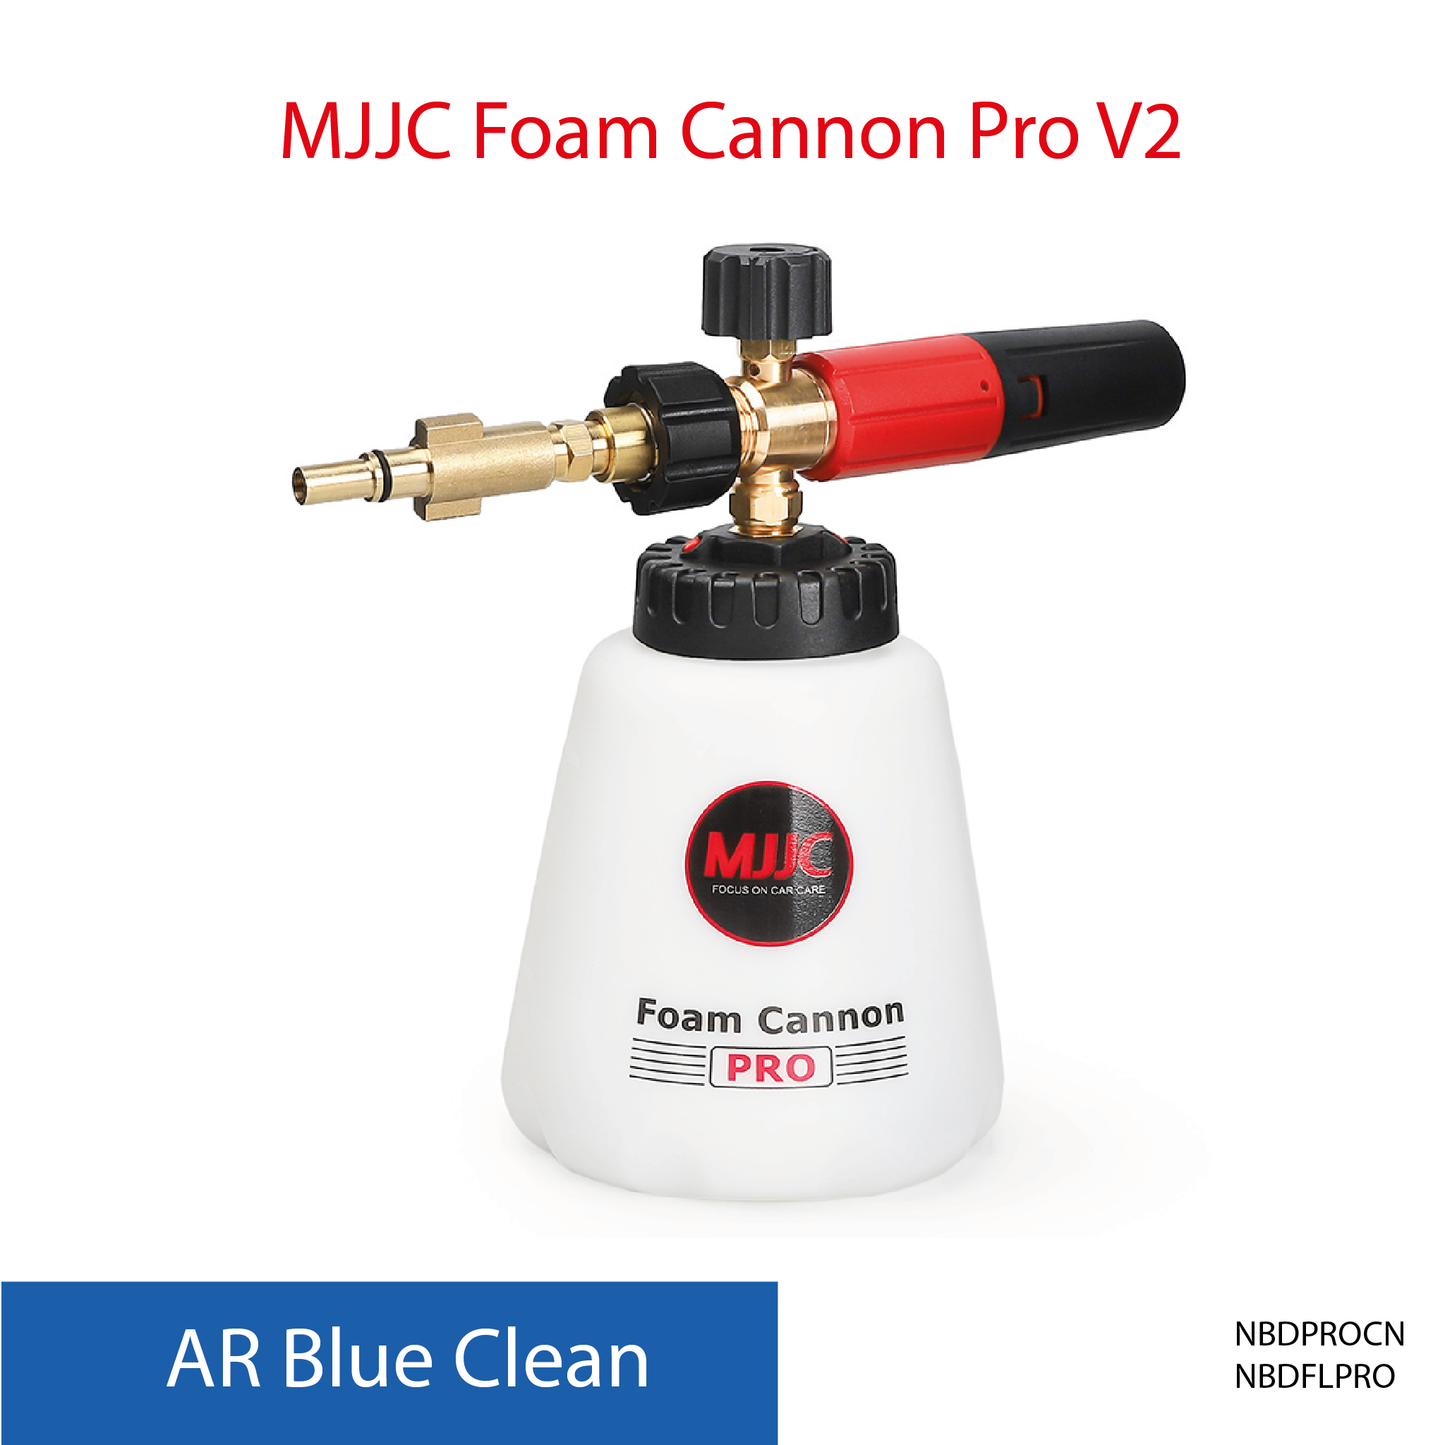 AR Blue Clean pressure washer - MJJC Foam Cannon Pro V2 (Pressure Washer Snow Foam Lance Gun)